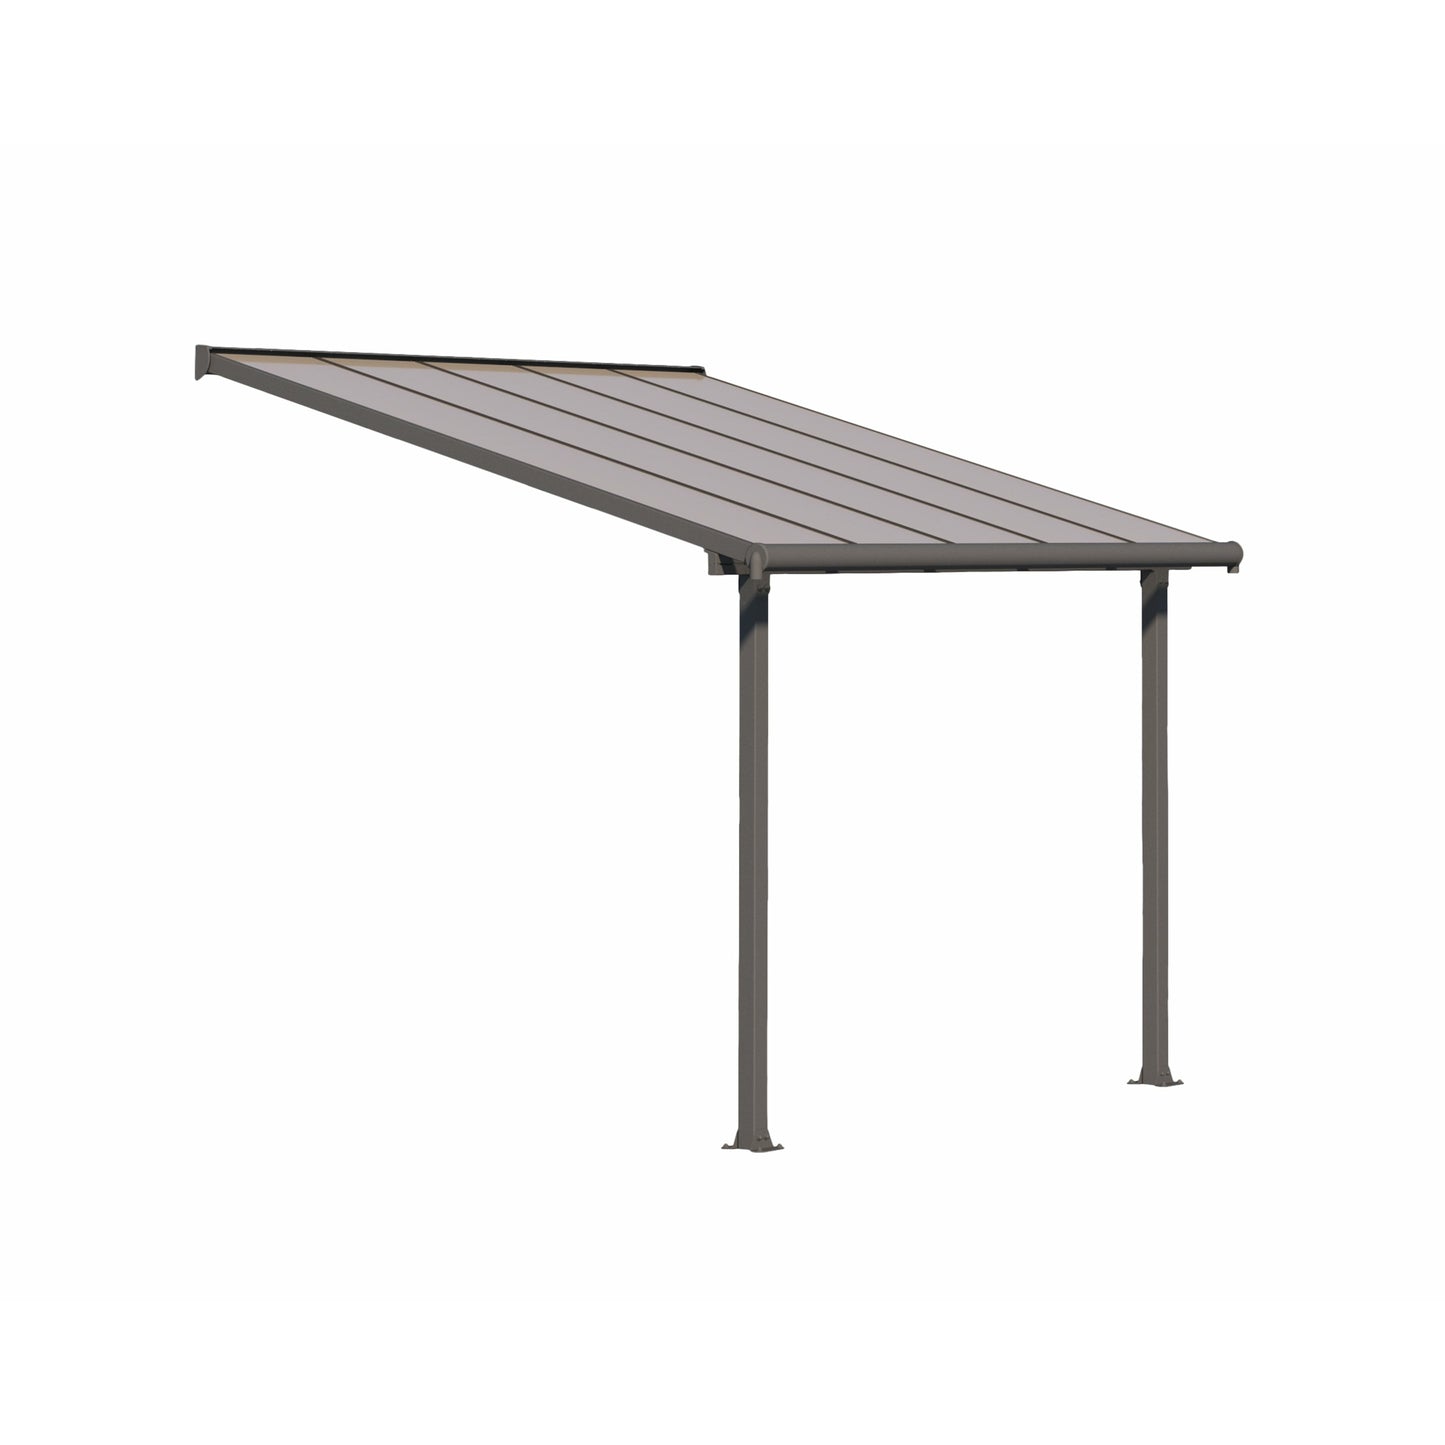 Palram Olympia 10' x 10' Patio Cover - Gray/Bronze